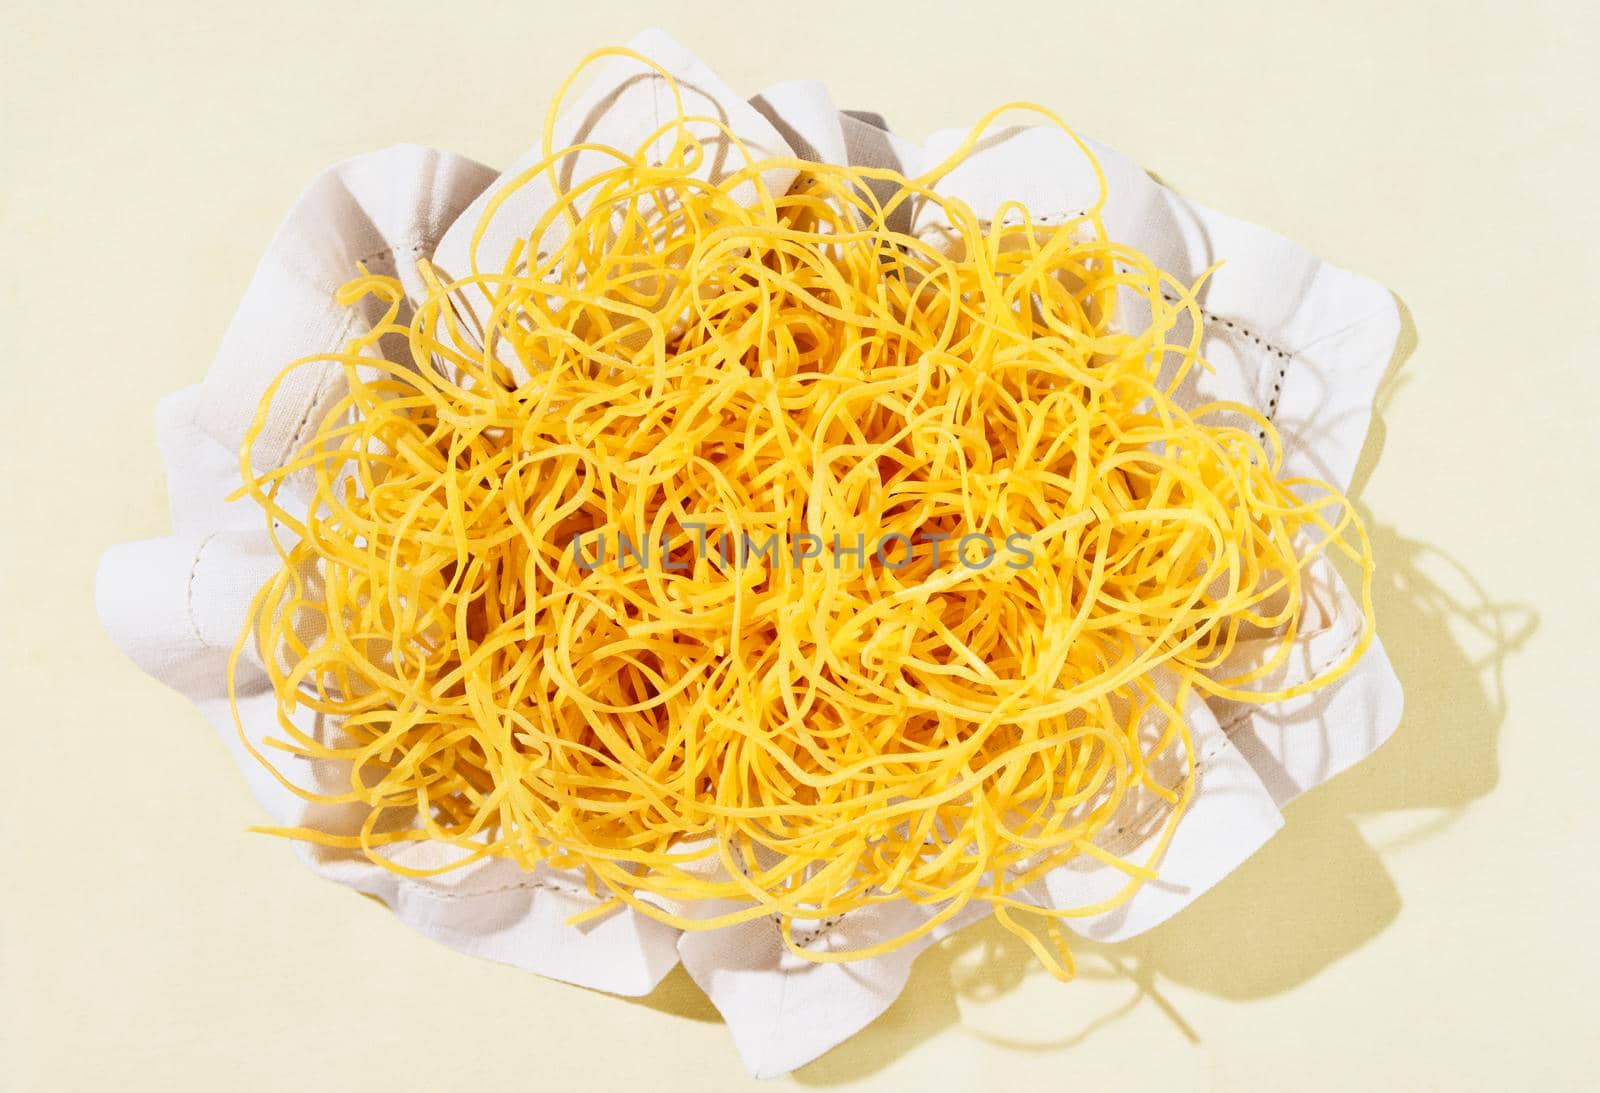  Fresh tagliatelle pasta in white napkin , beautiful long flat yellow ribbons of raw pasta